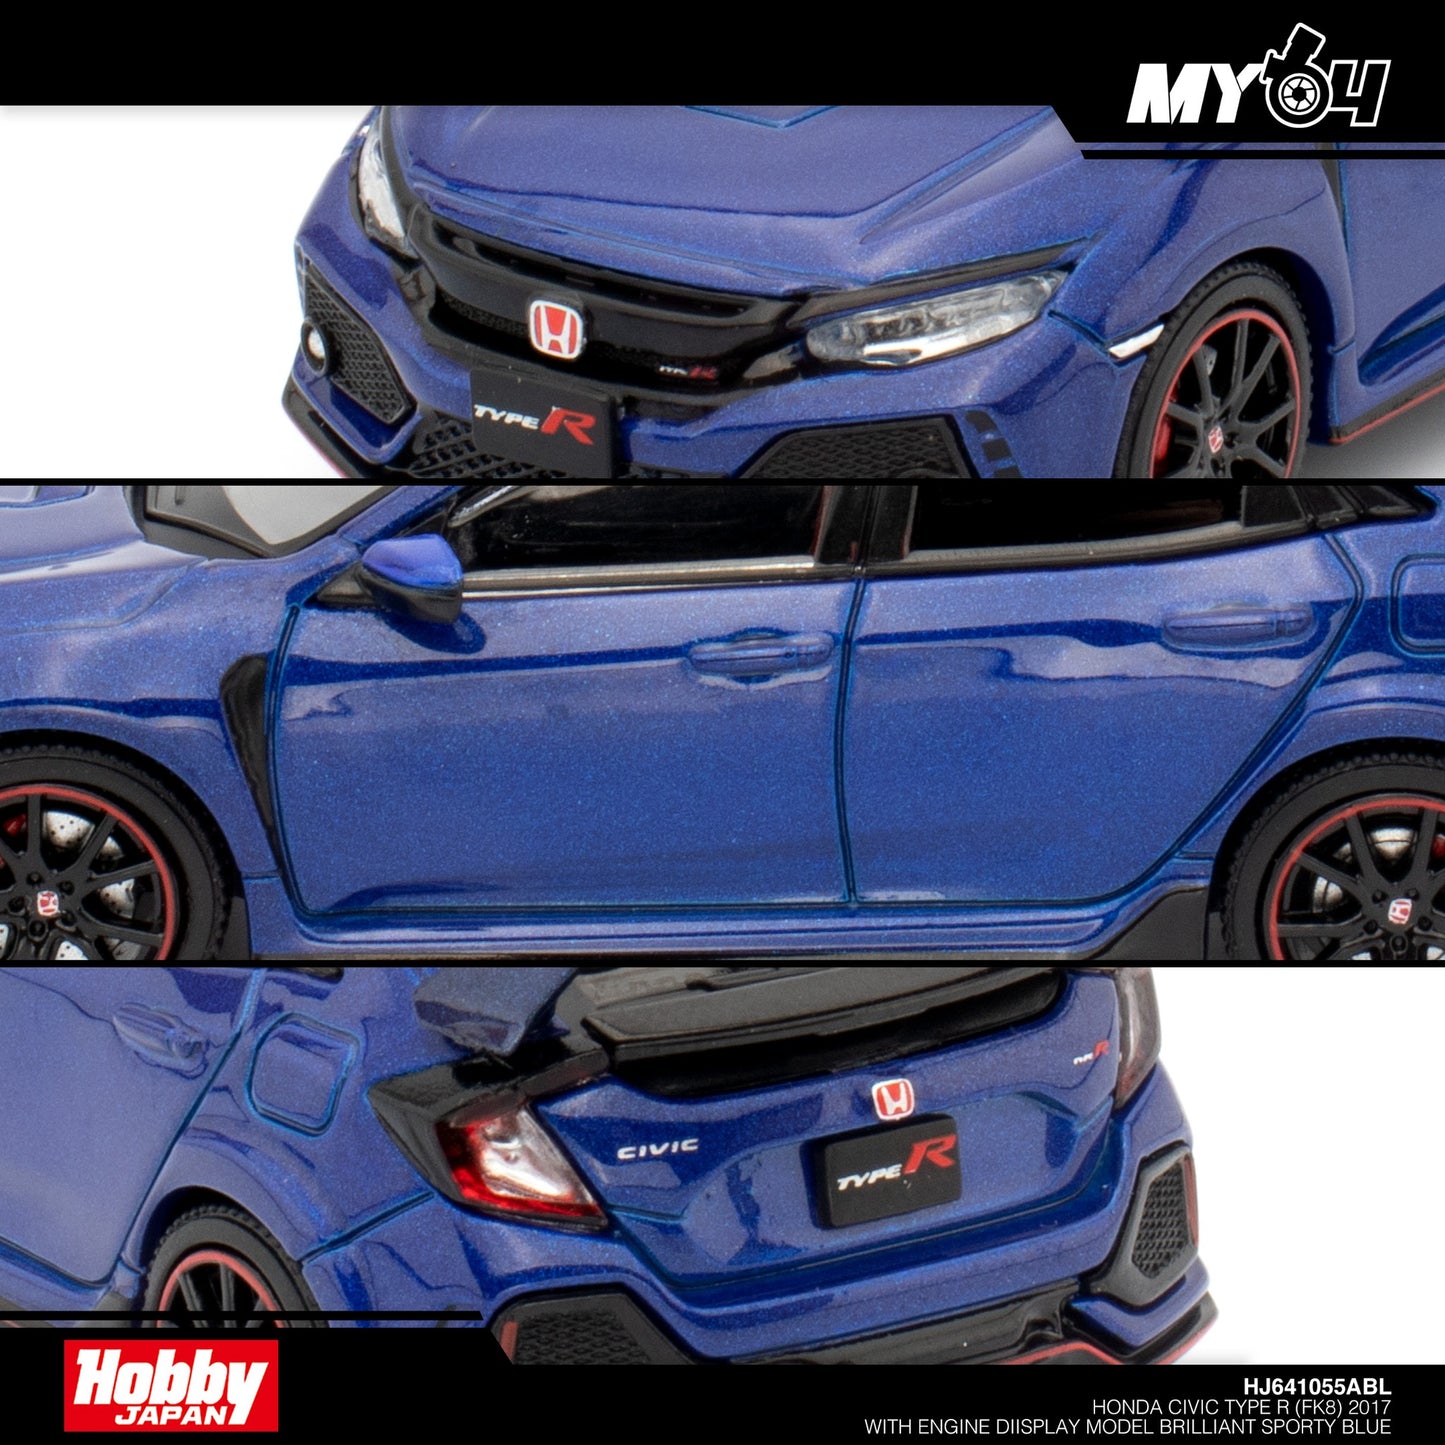 [Hobby Japan] Honda Civic Type R (FK8) 2017 With Engine Display Model